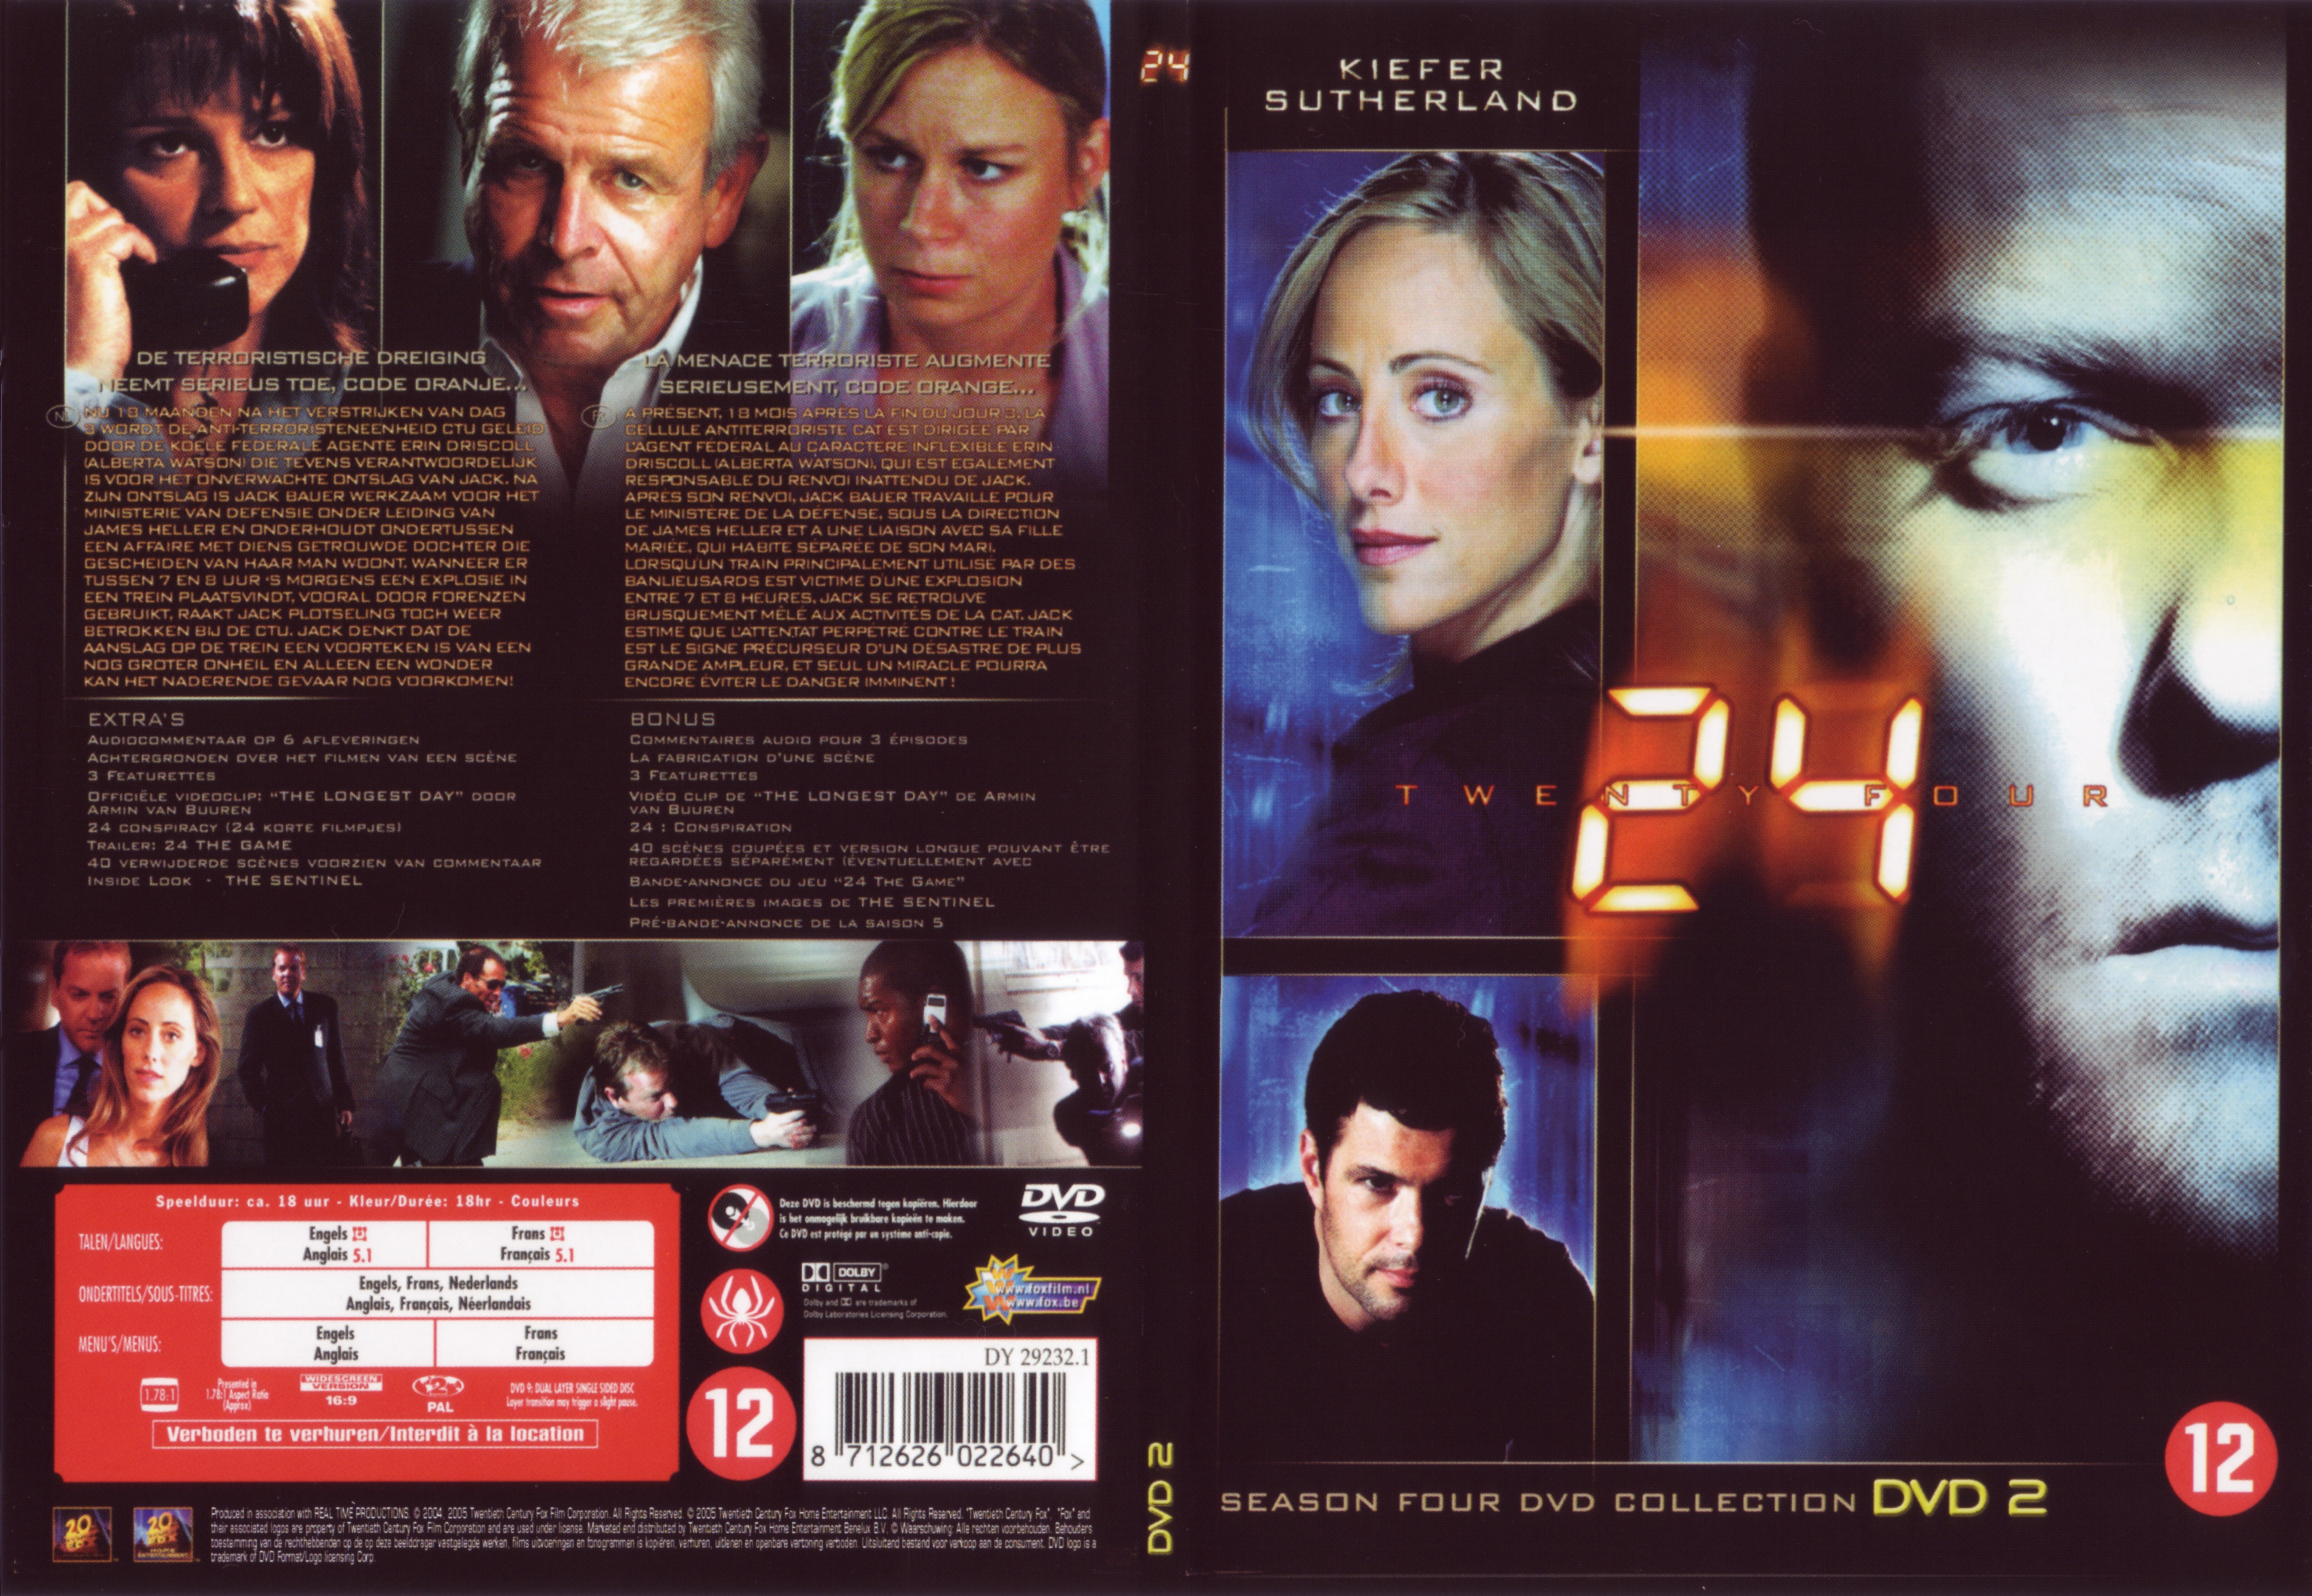 Jaquette DVD 24 heures chrono saison 4 DVD 2